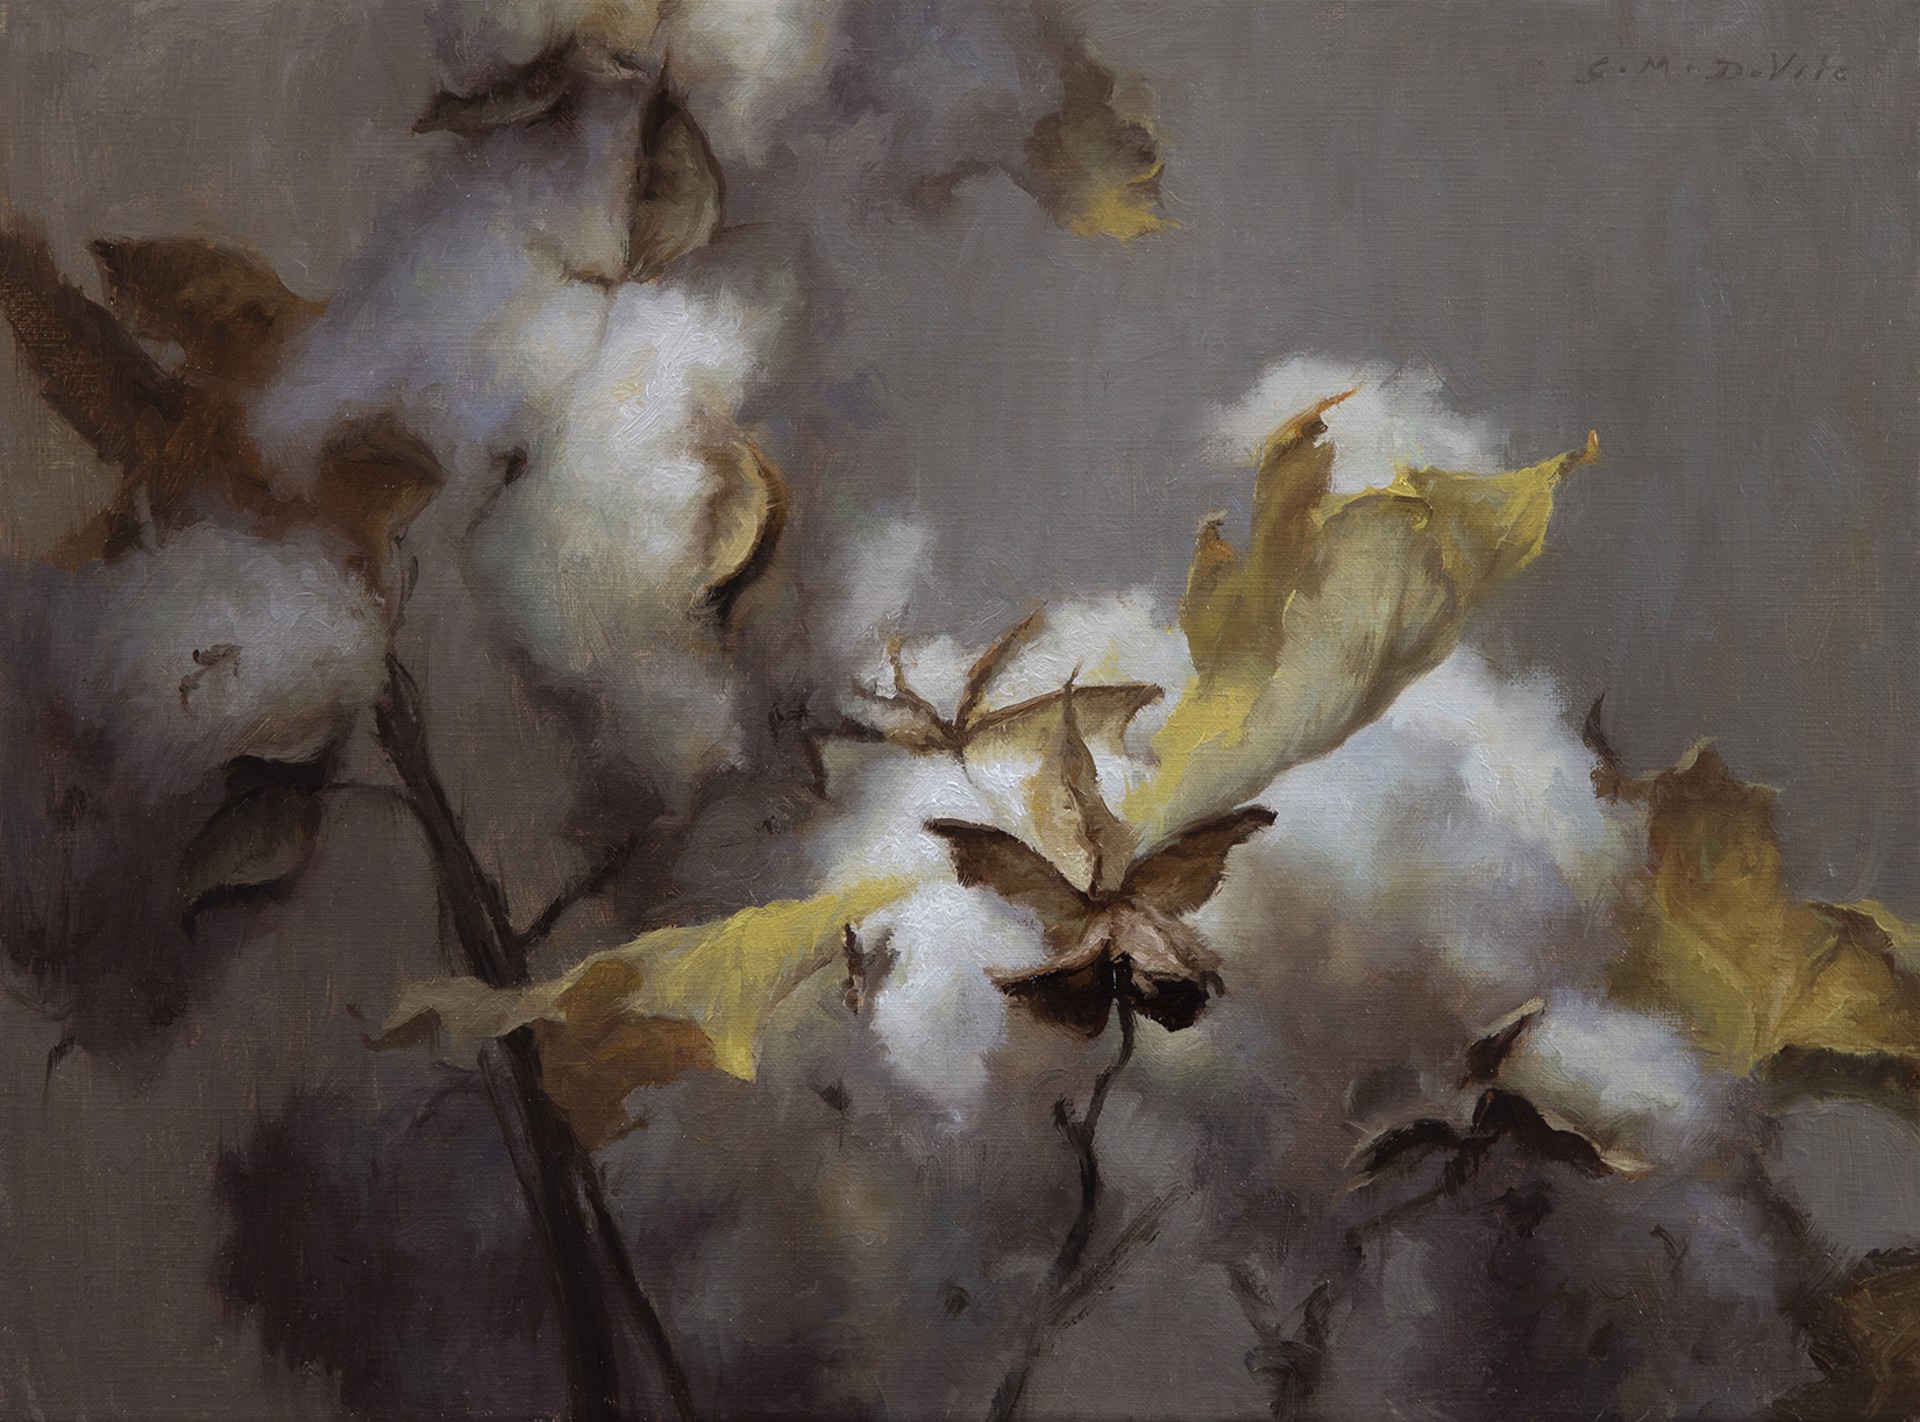 Cotton and Ochre by Grace DeVito